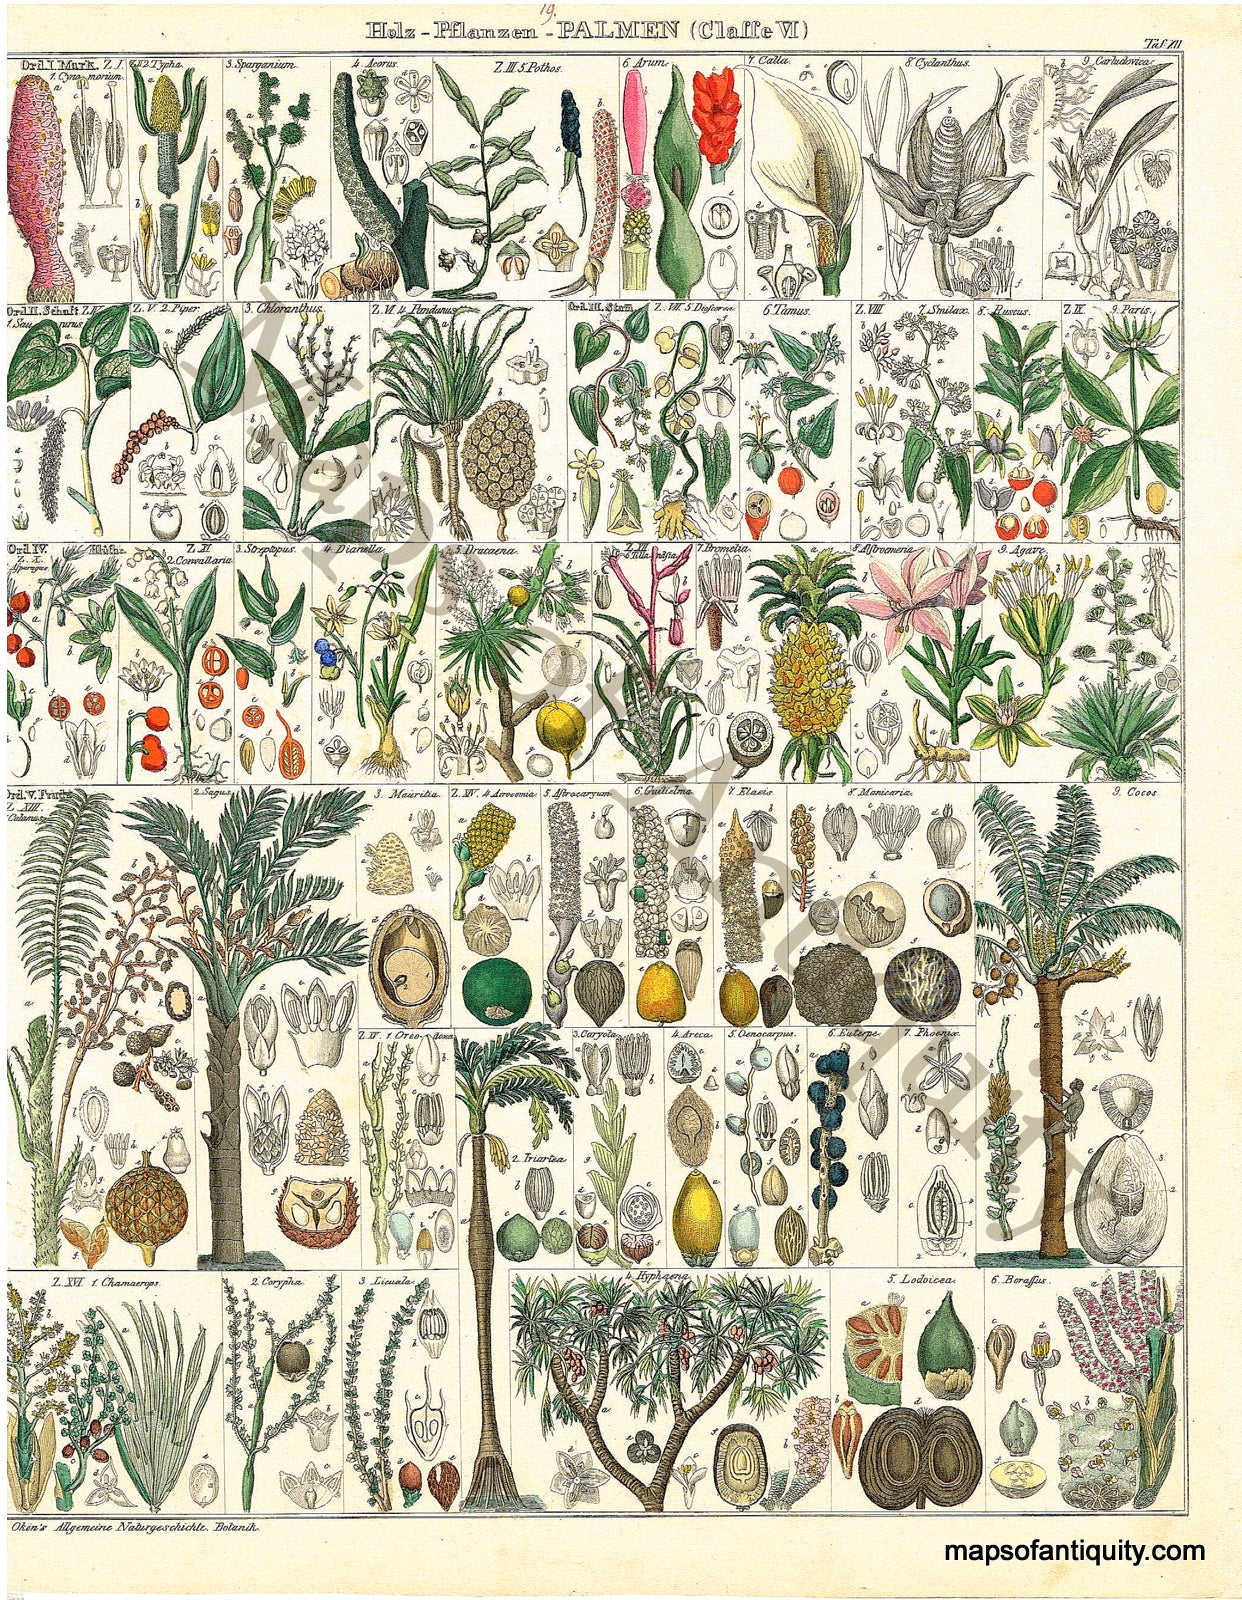 Hand-Colored-Antique-Illustration-Halz-Pflanzen-Palmen-Palm-Oken-Natural-History-Prints-Botancial-1843-Oken-Maps-Of-Antiquity